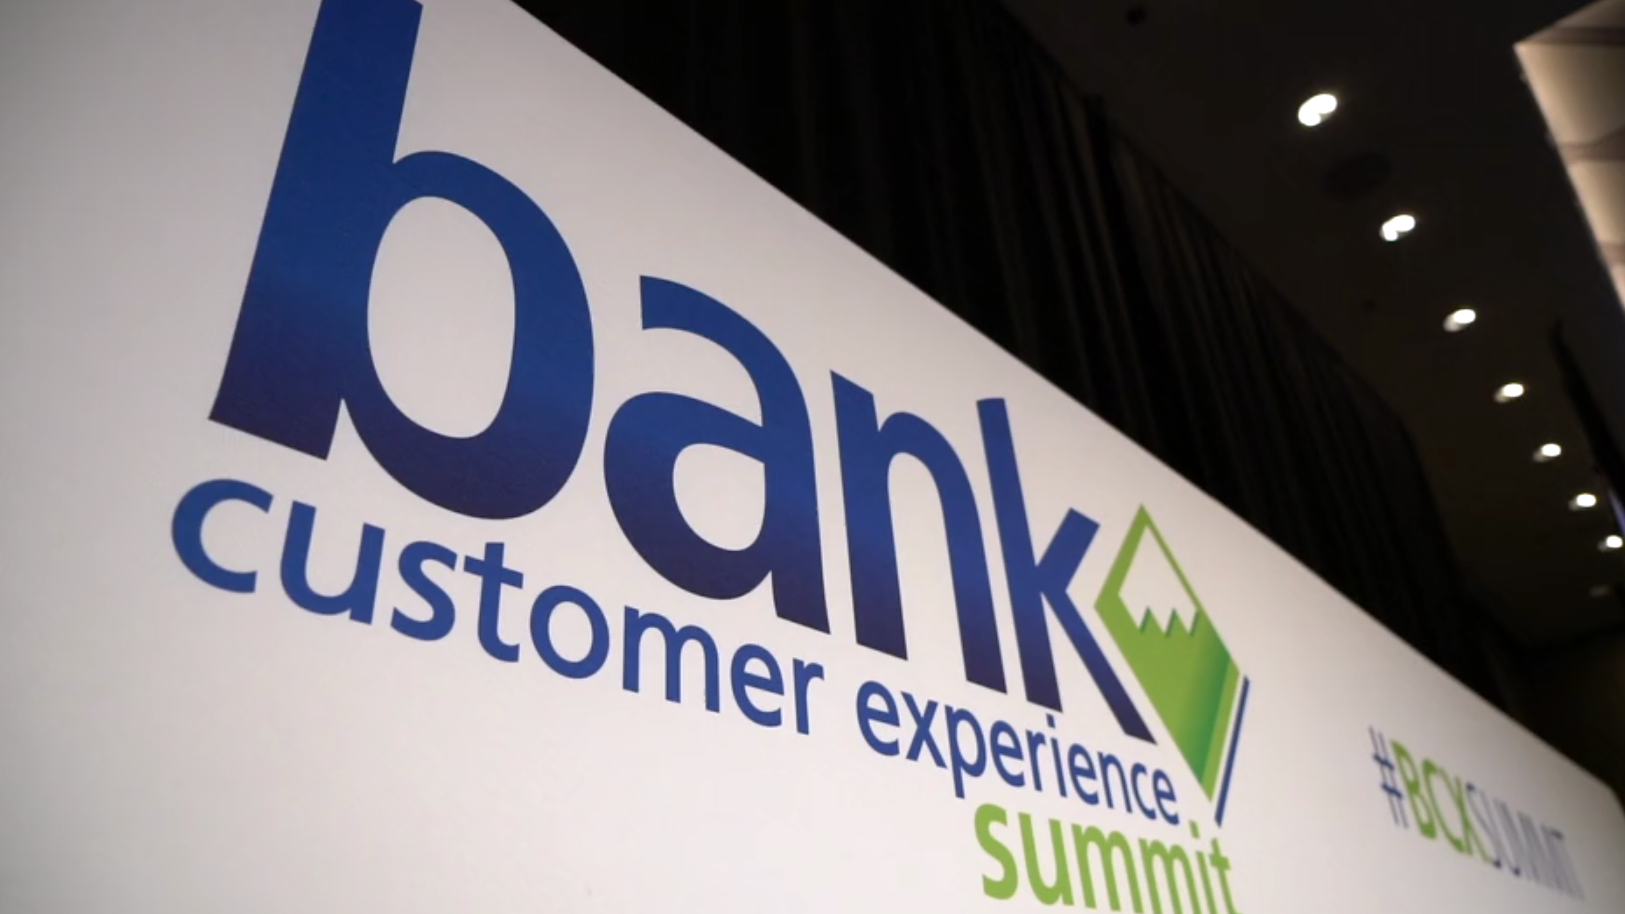 BANK CUSTOMER EXPERIENCE SUMMIT